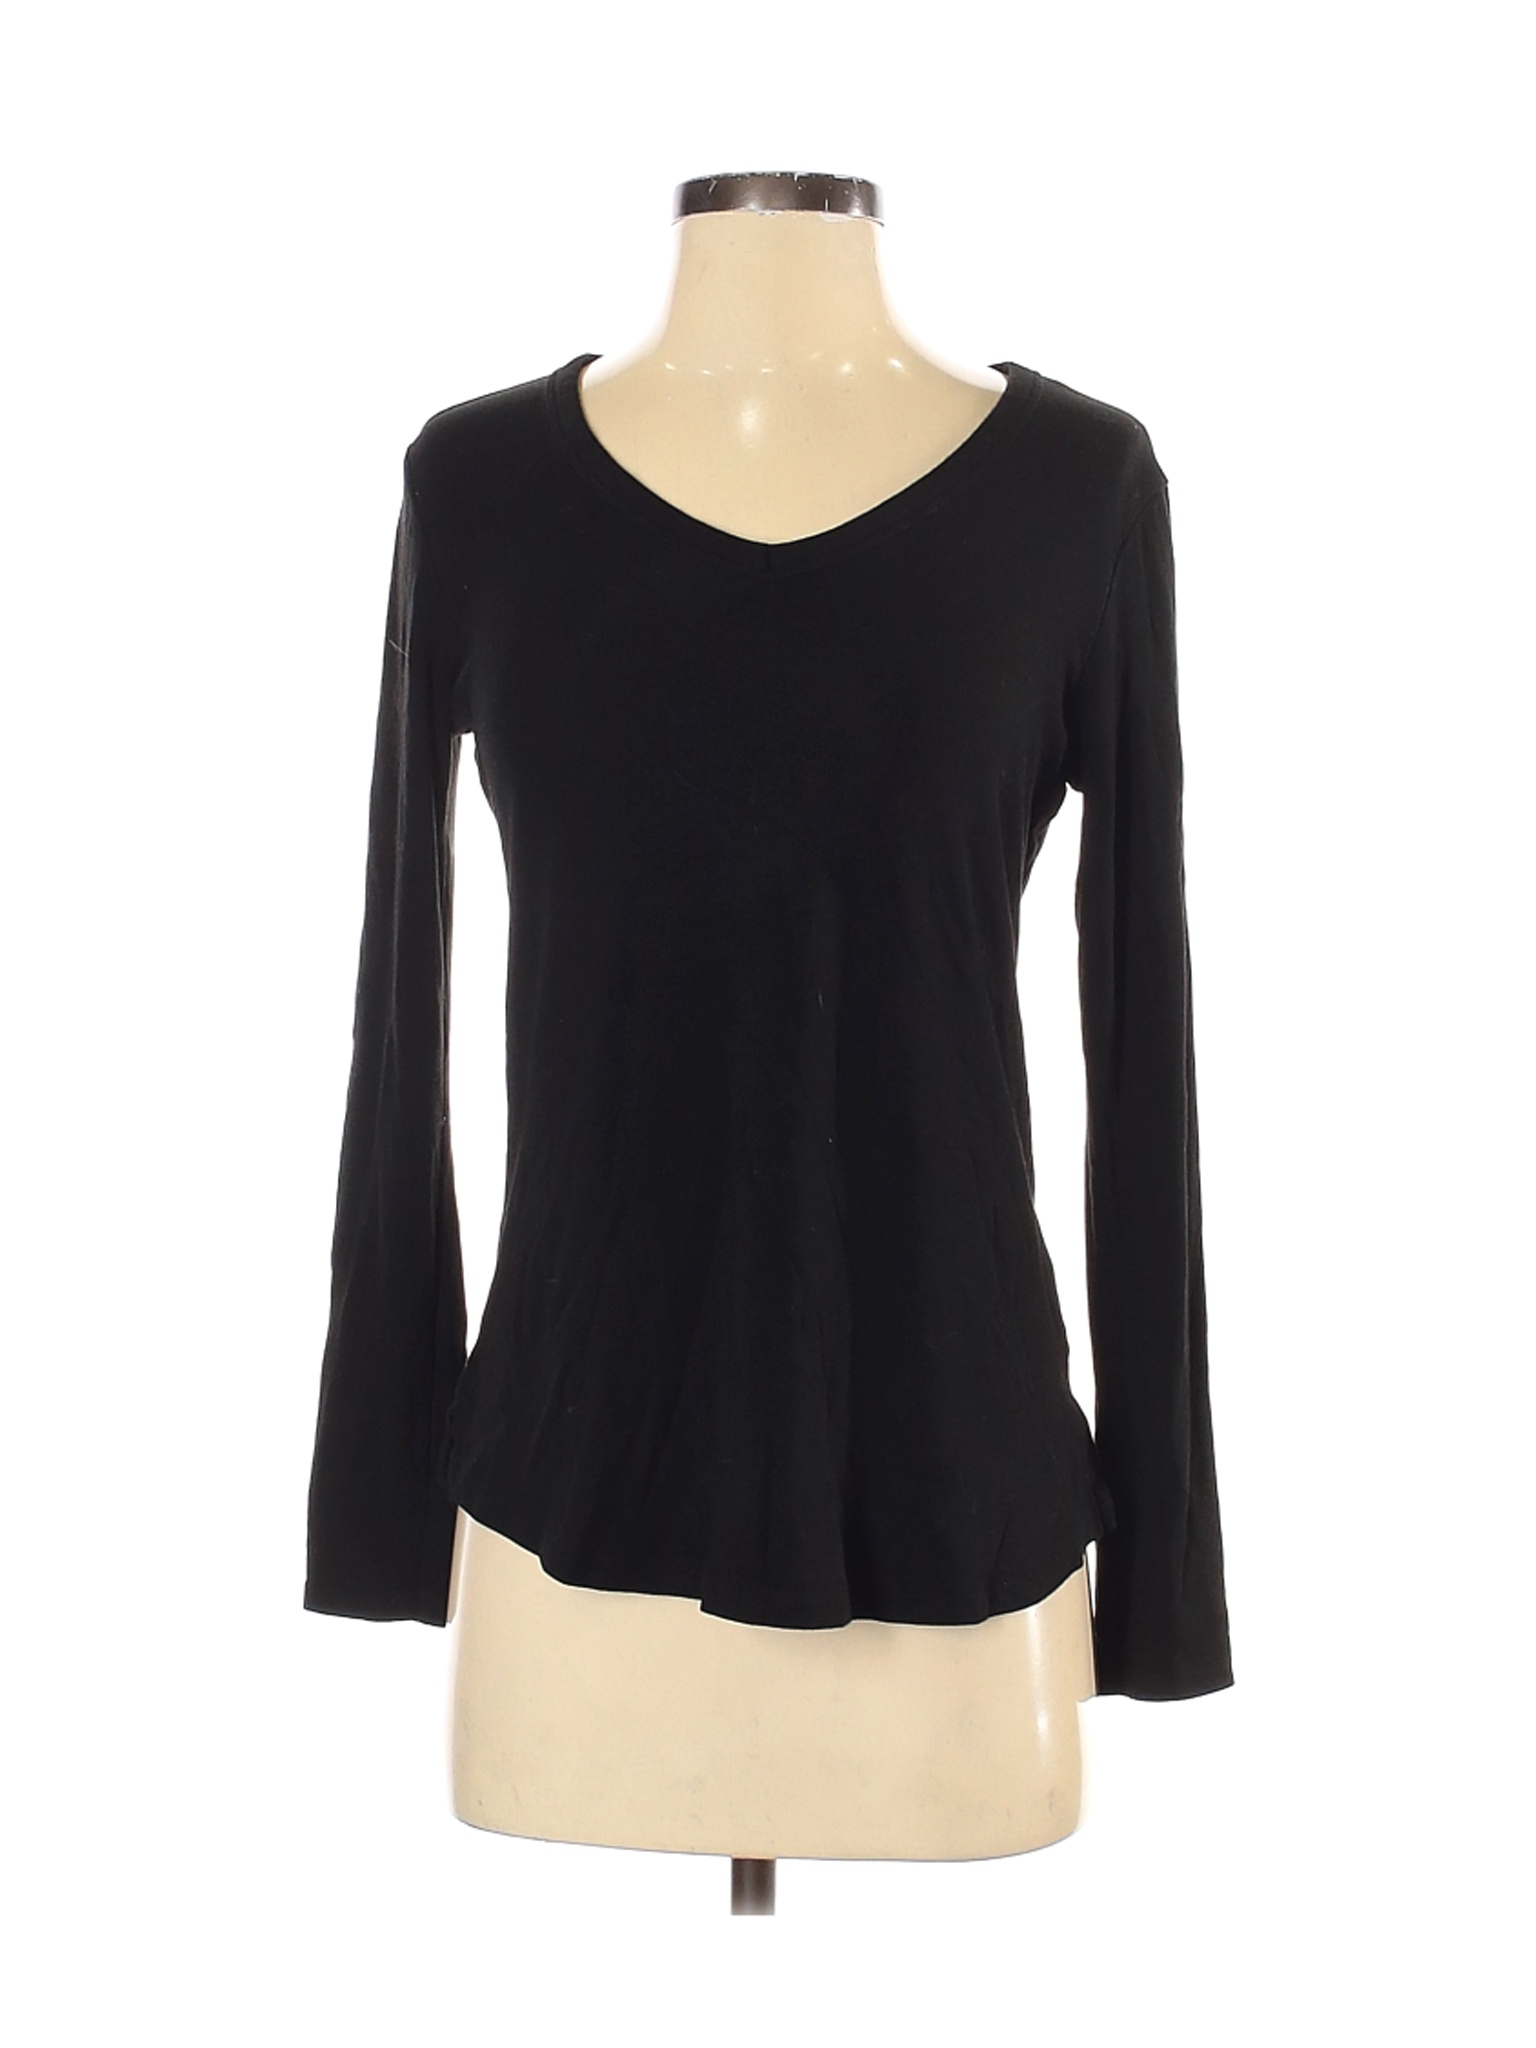 Cynthia Rowley TJX Women Black Long Sleeve T-Shirt S | eBay